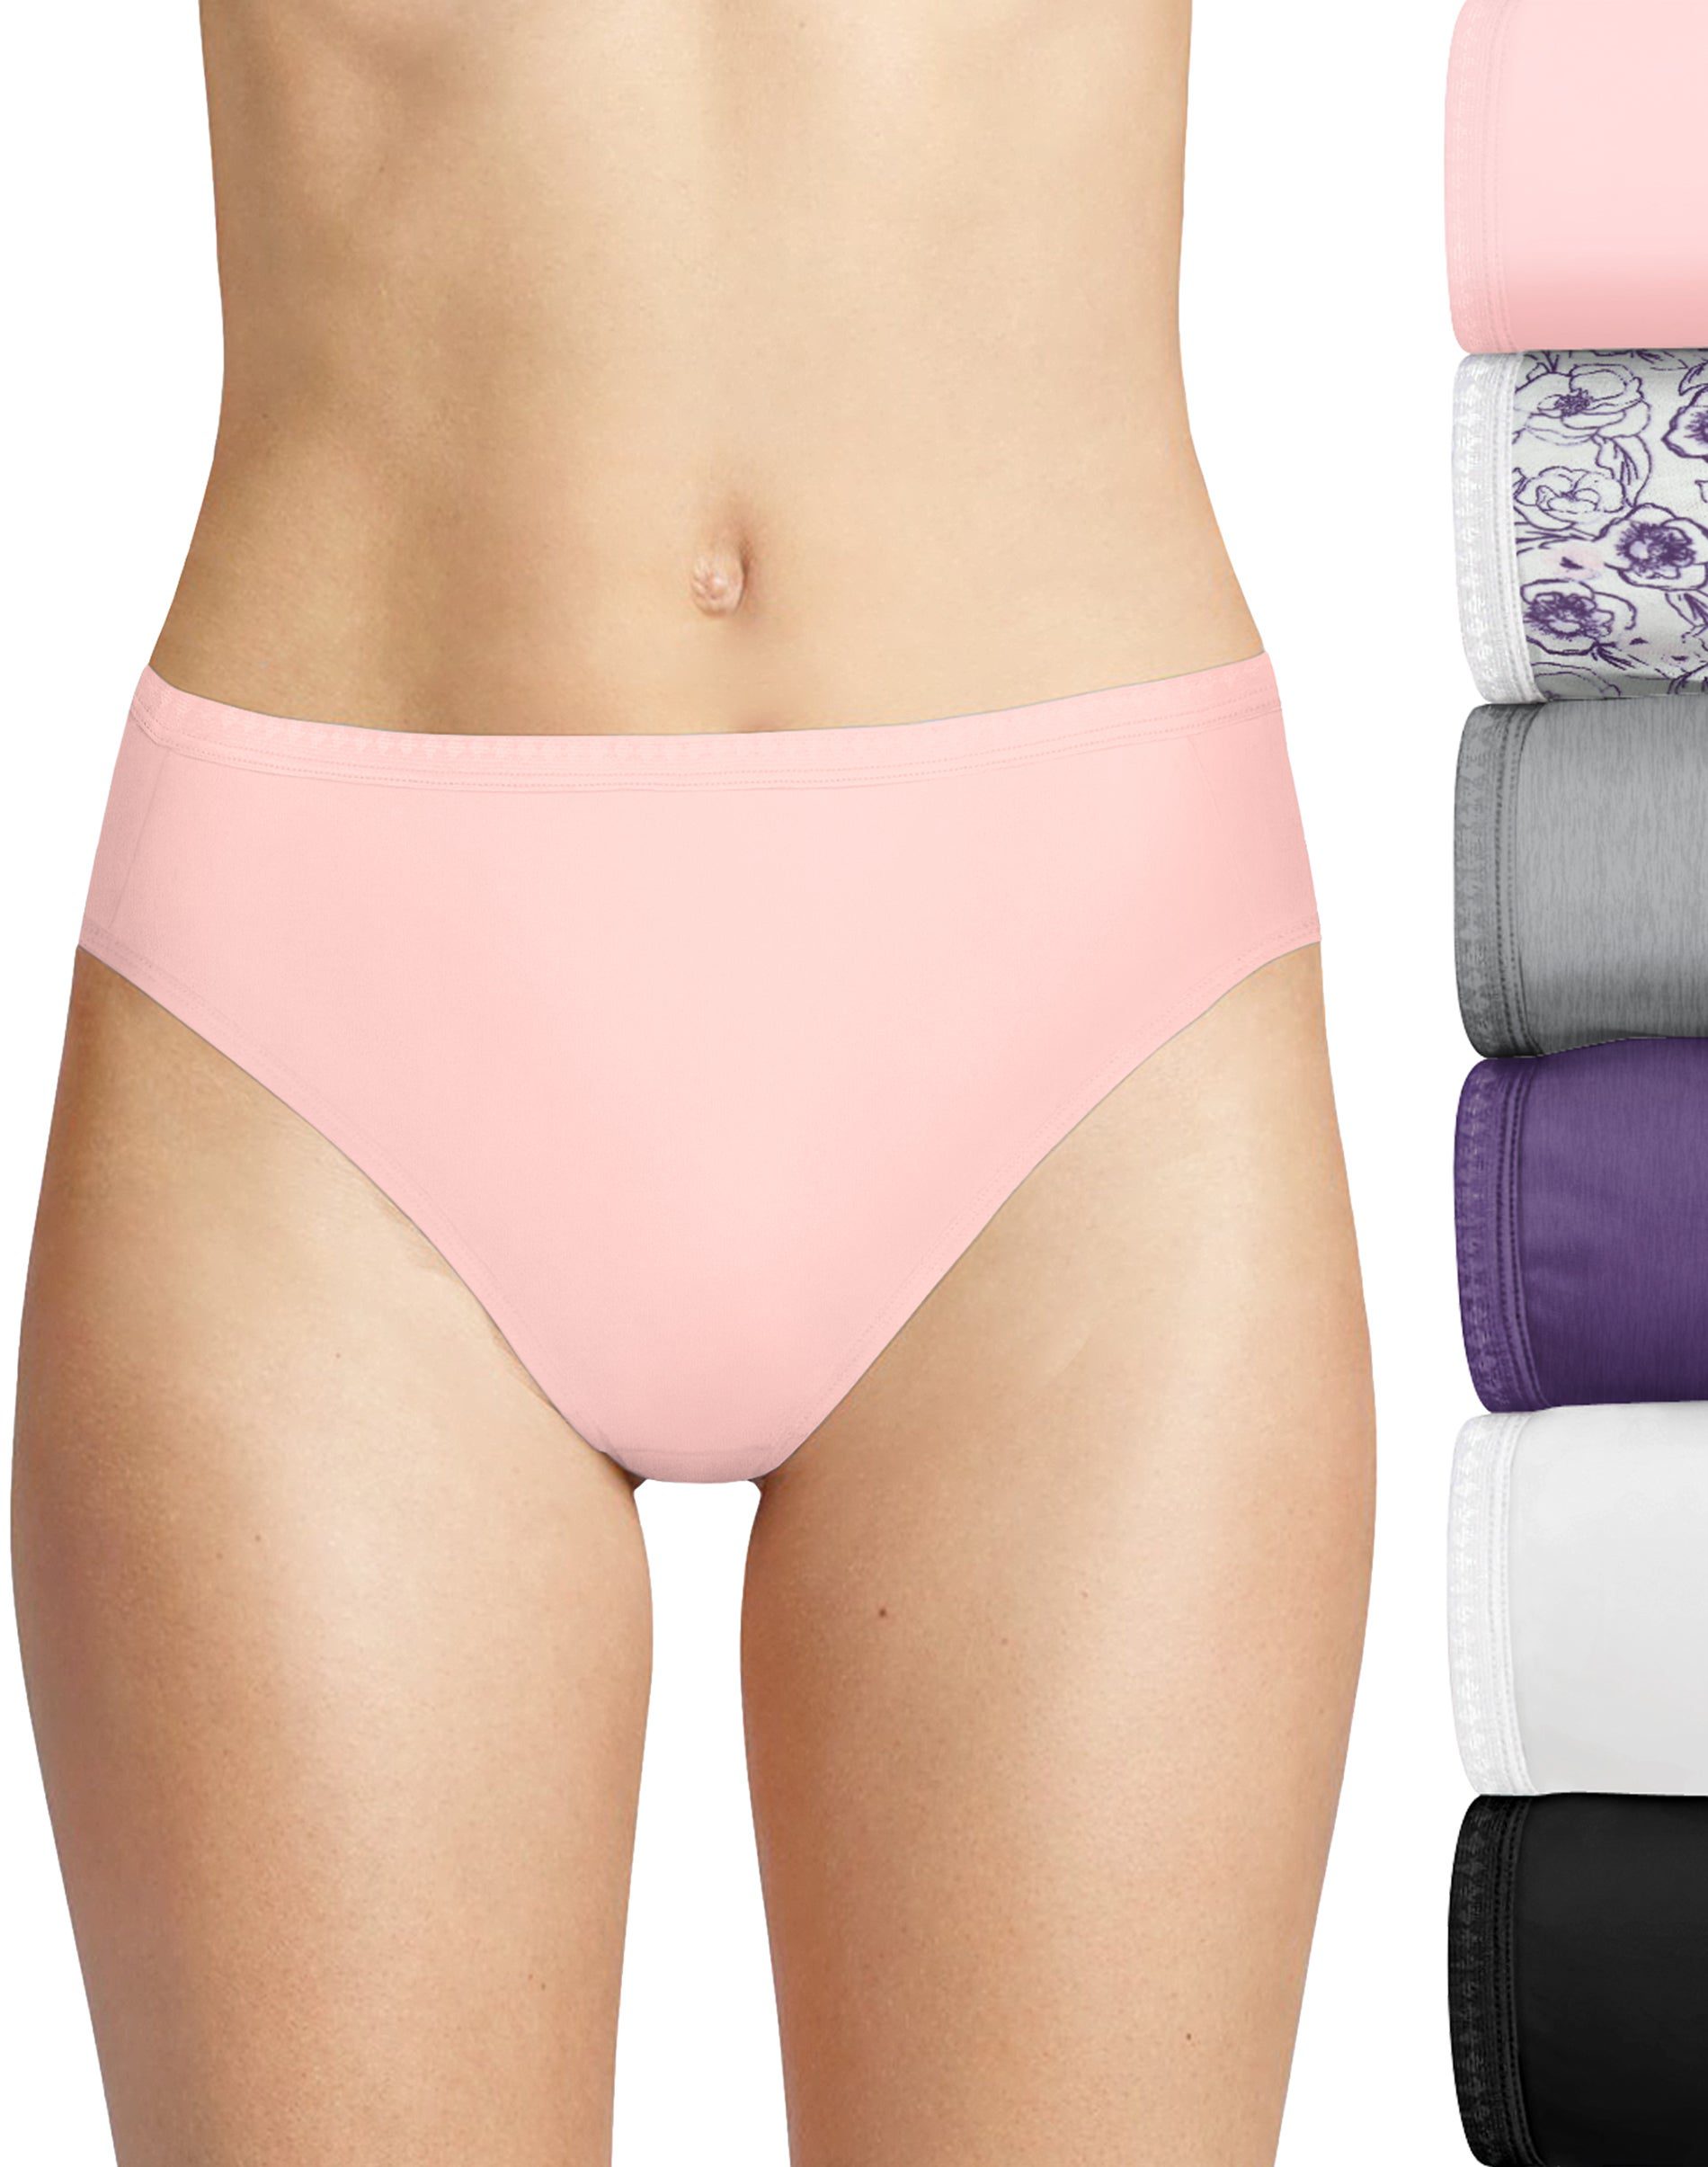 Hanes Ultimate Women's Breathable Hi-Cut Underwear, 6-Pack